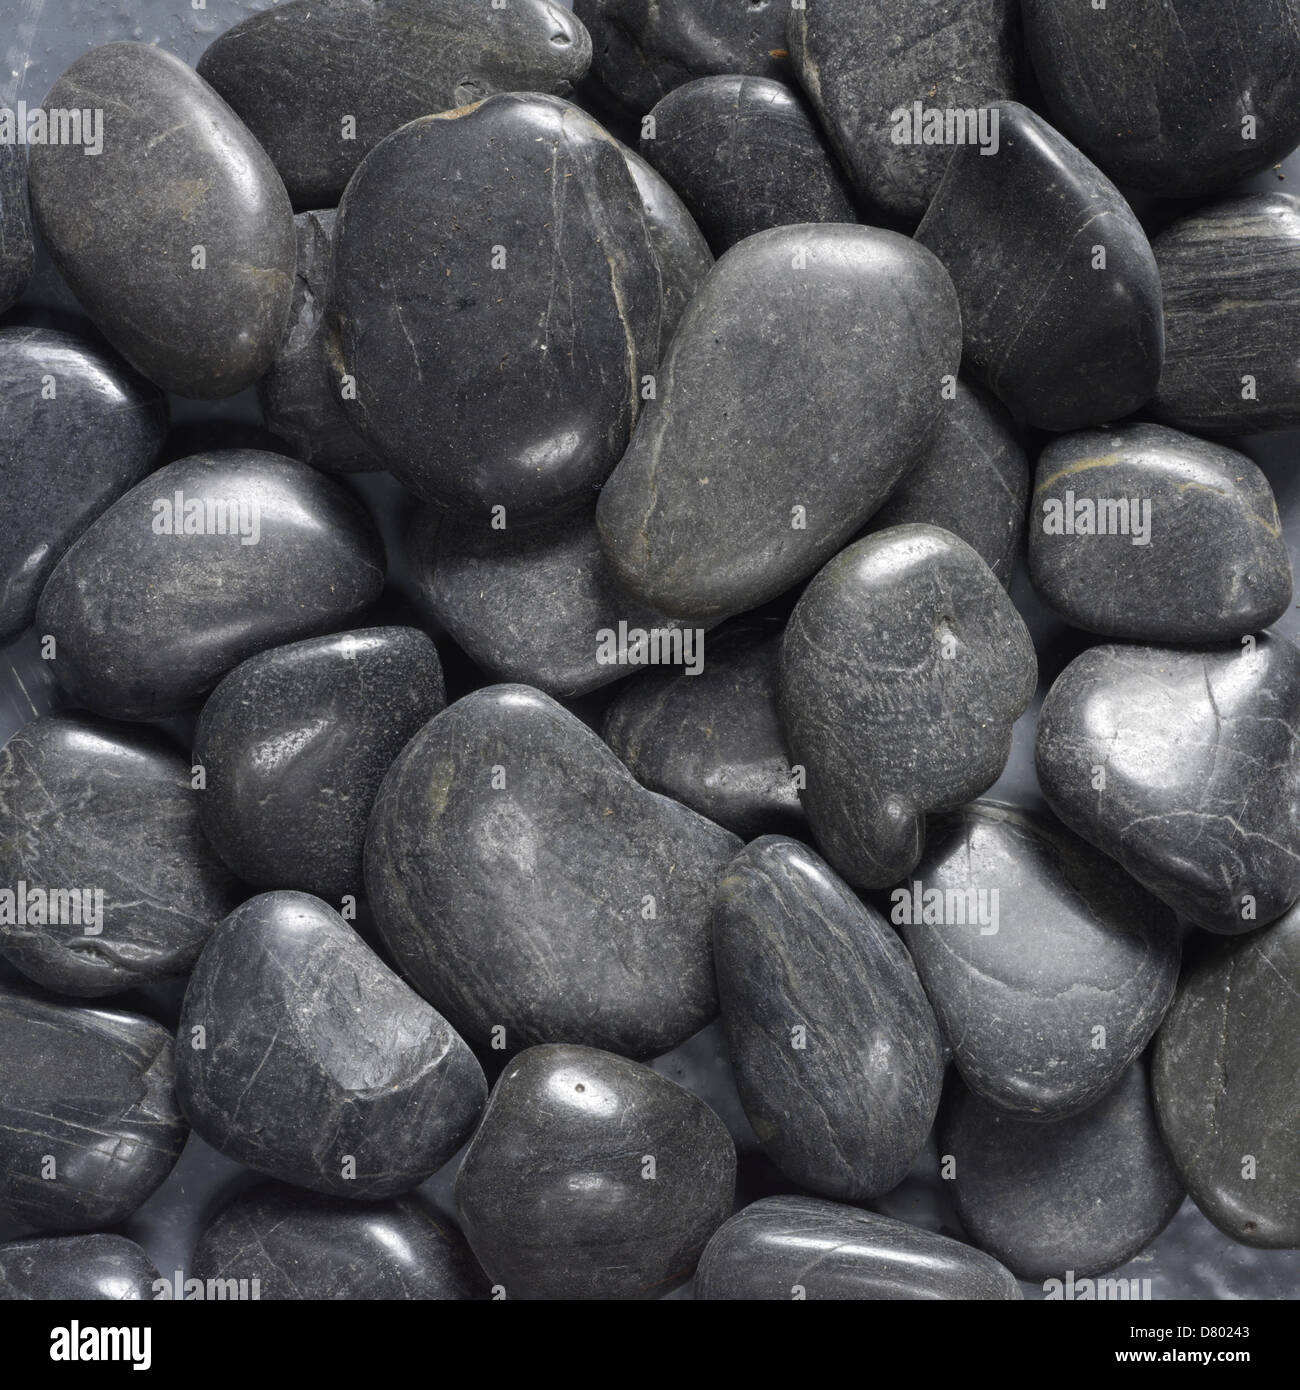 Shiny Black sea side pebbles Stock Photo